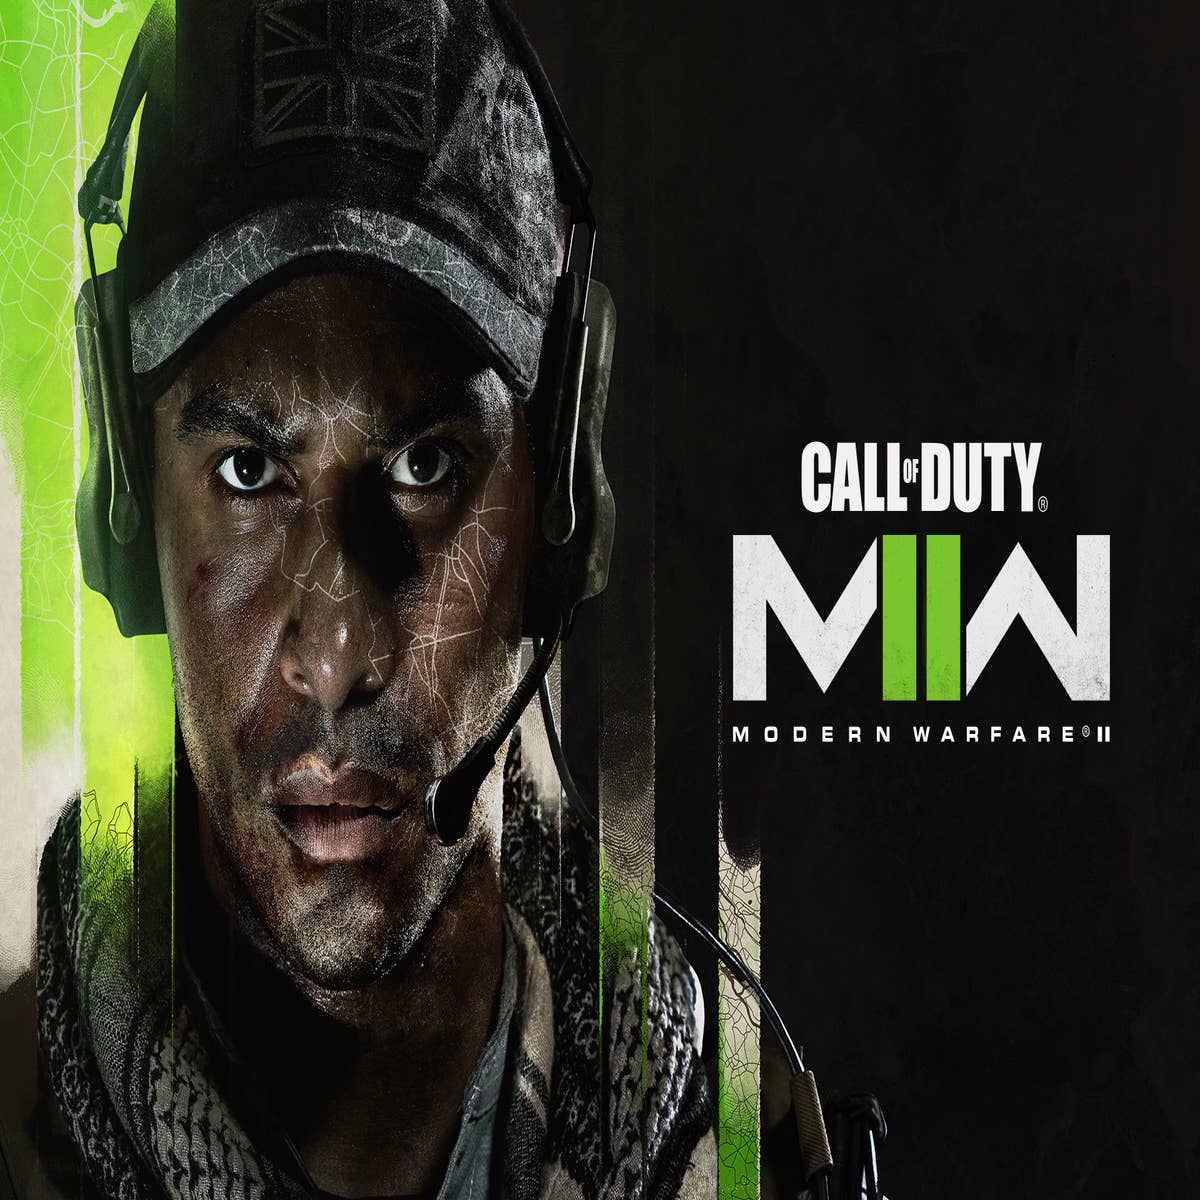 Announcement: Digitally preorder Call of Duty®: Modern Warfare® II